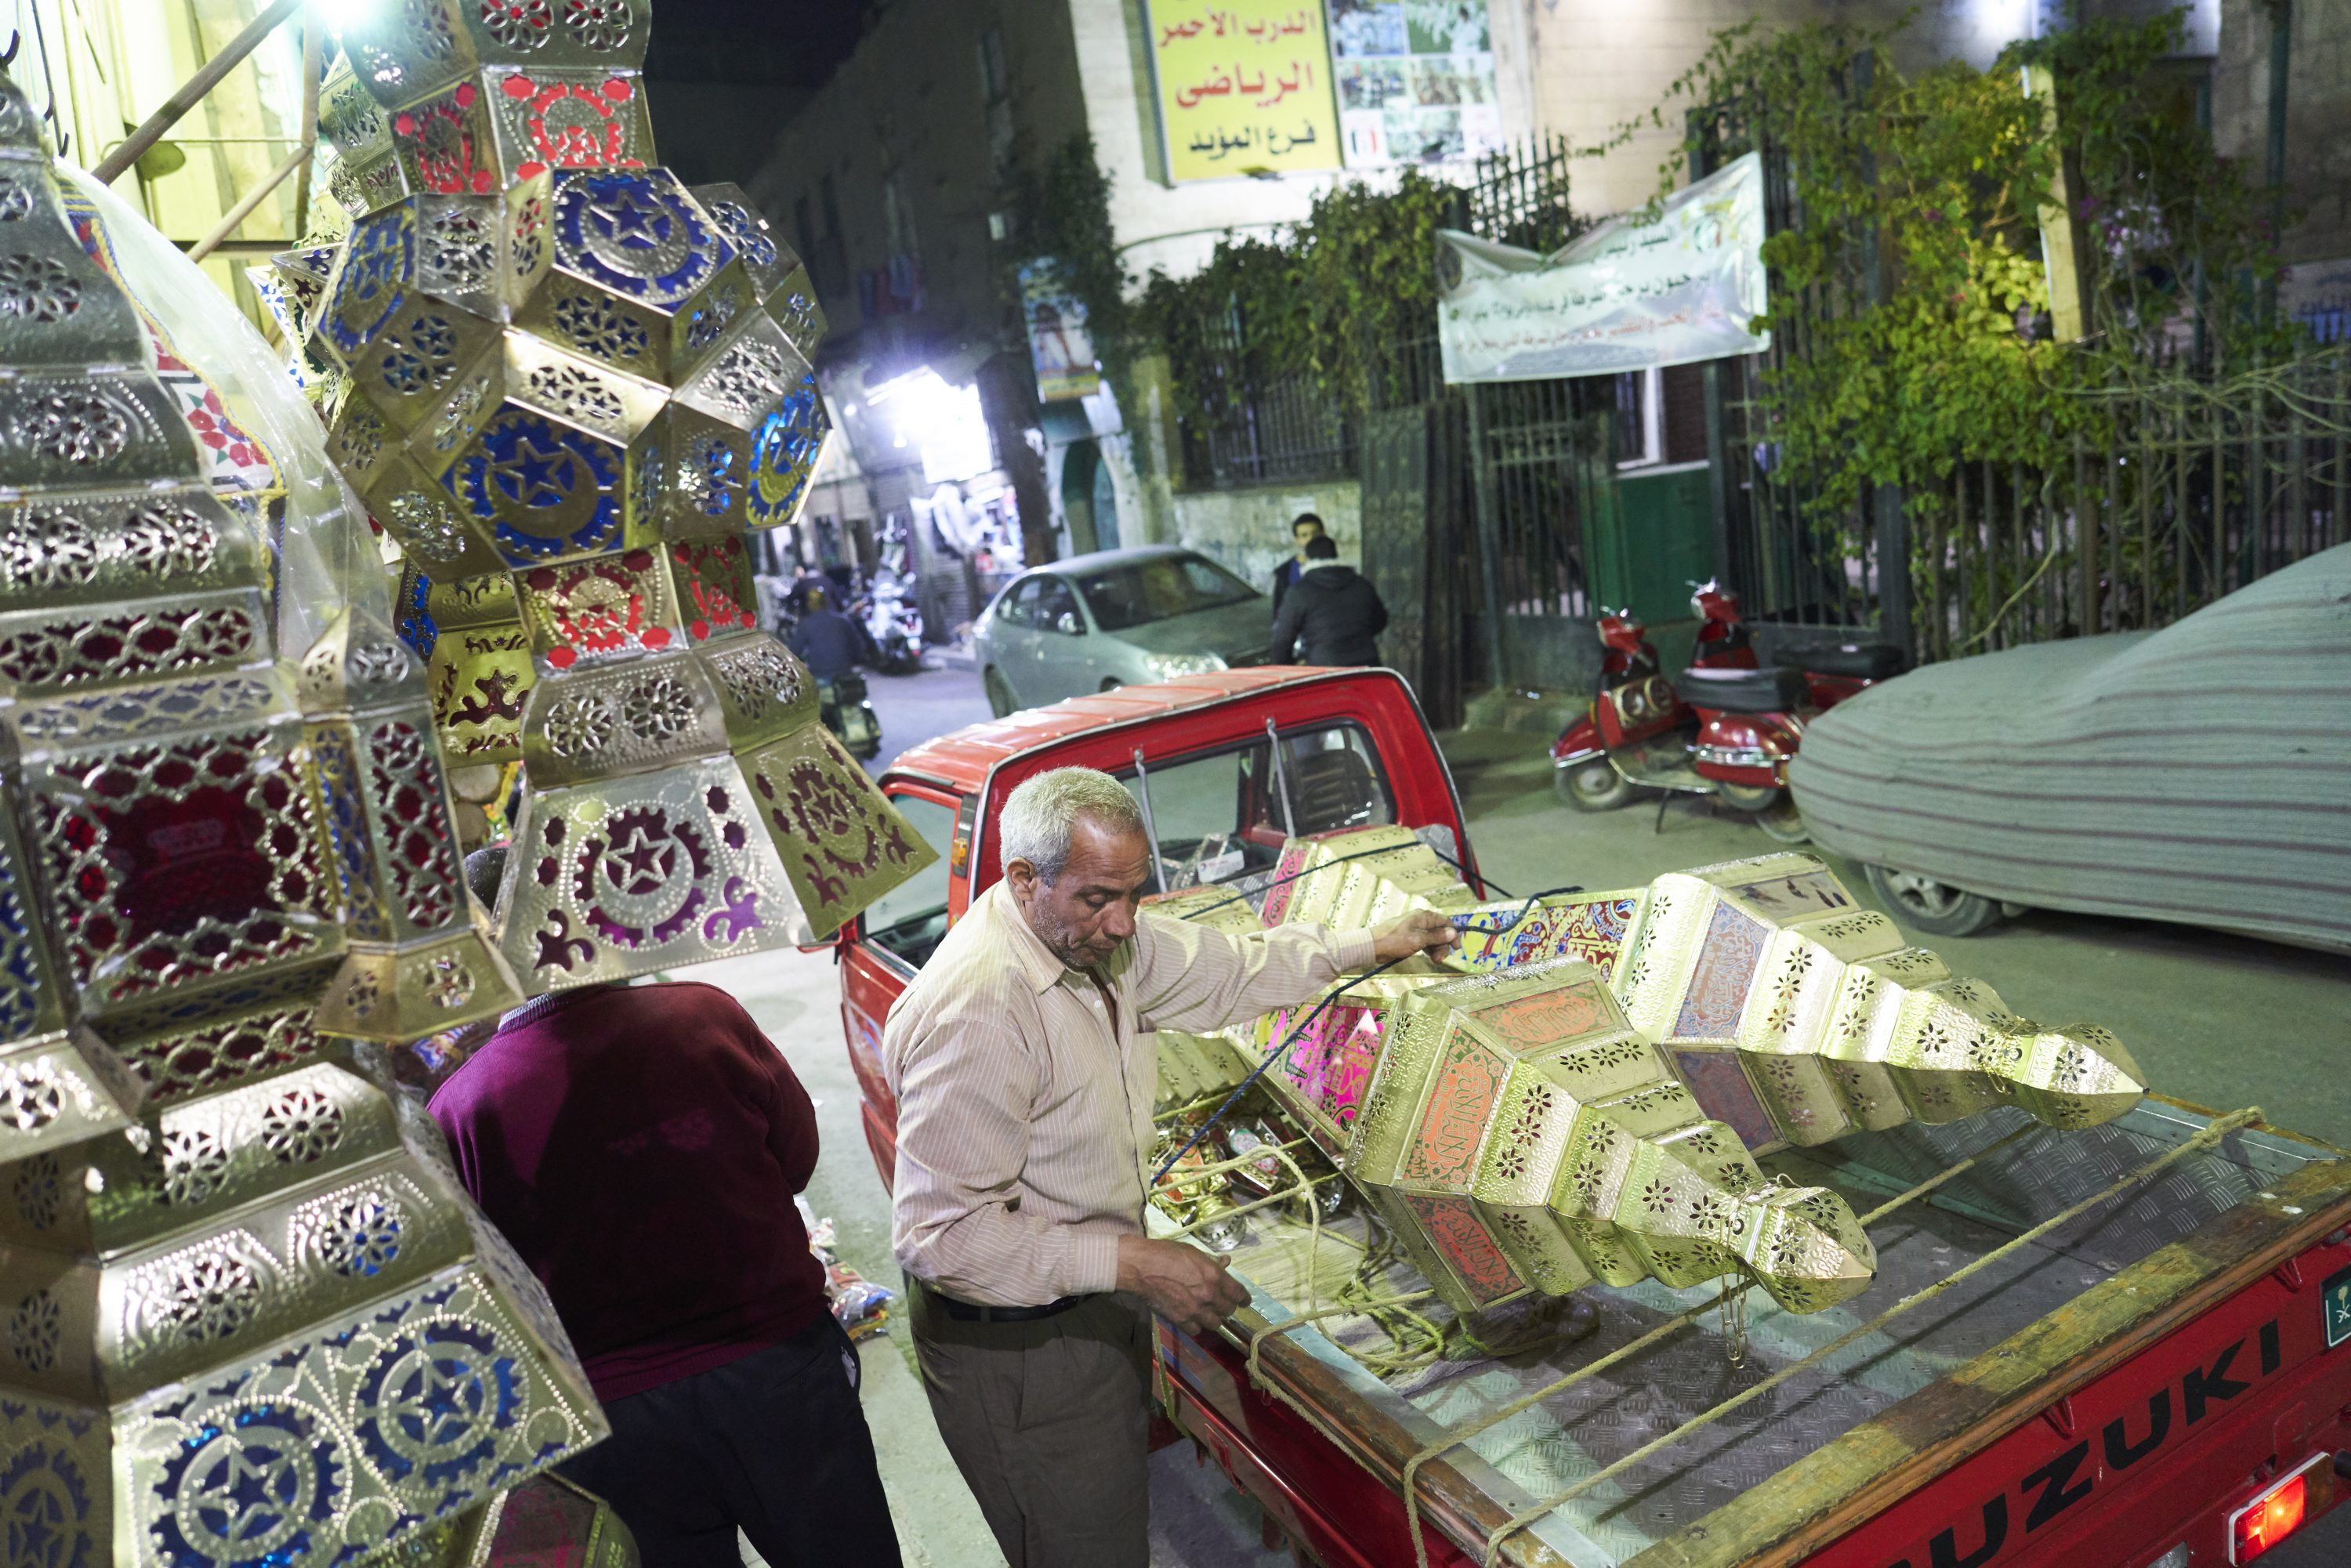 The store of Nabil Hussein Shata sells a vide variety of Ramadan lanterns in Darb Al-Ahmar in Cairo, Egypt.